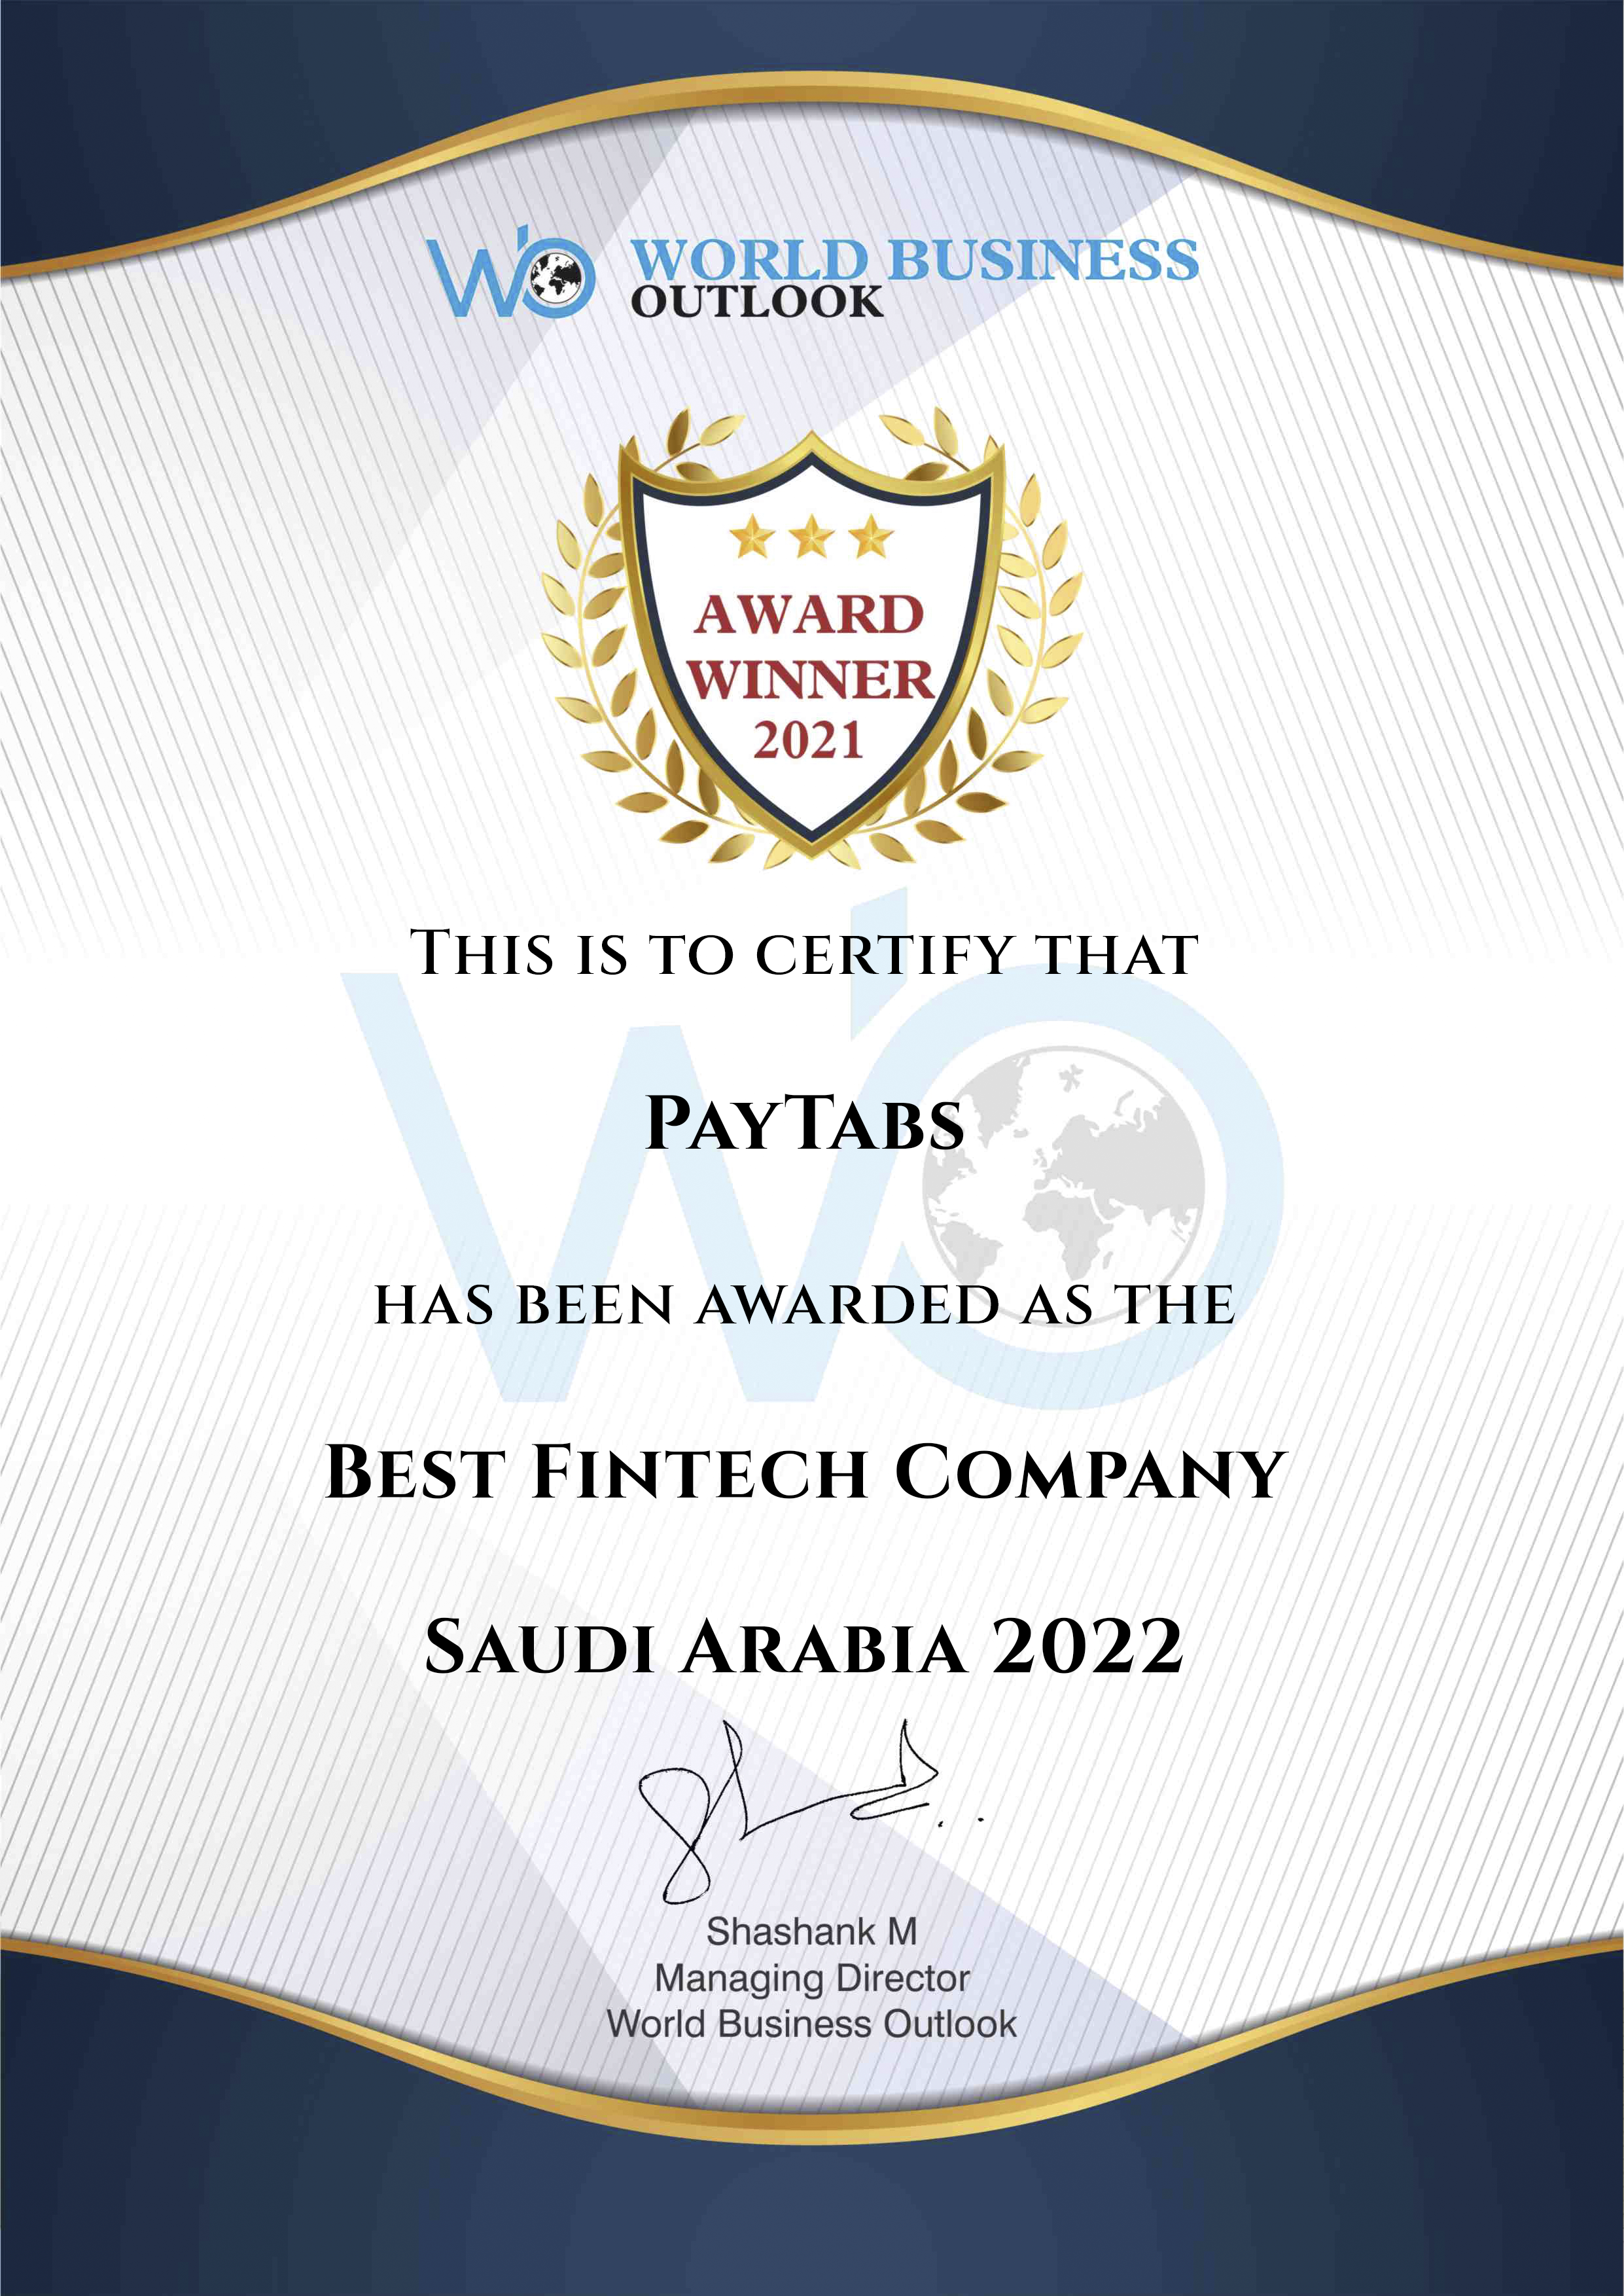 World Business Outlook - Best Fintech Company Saudi Arabia 2022